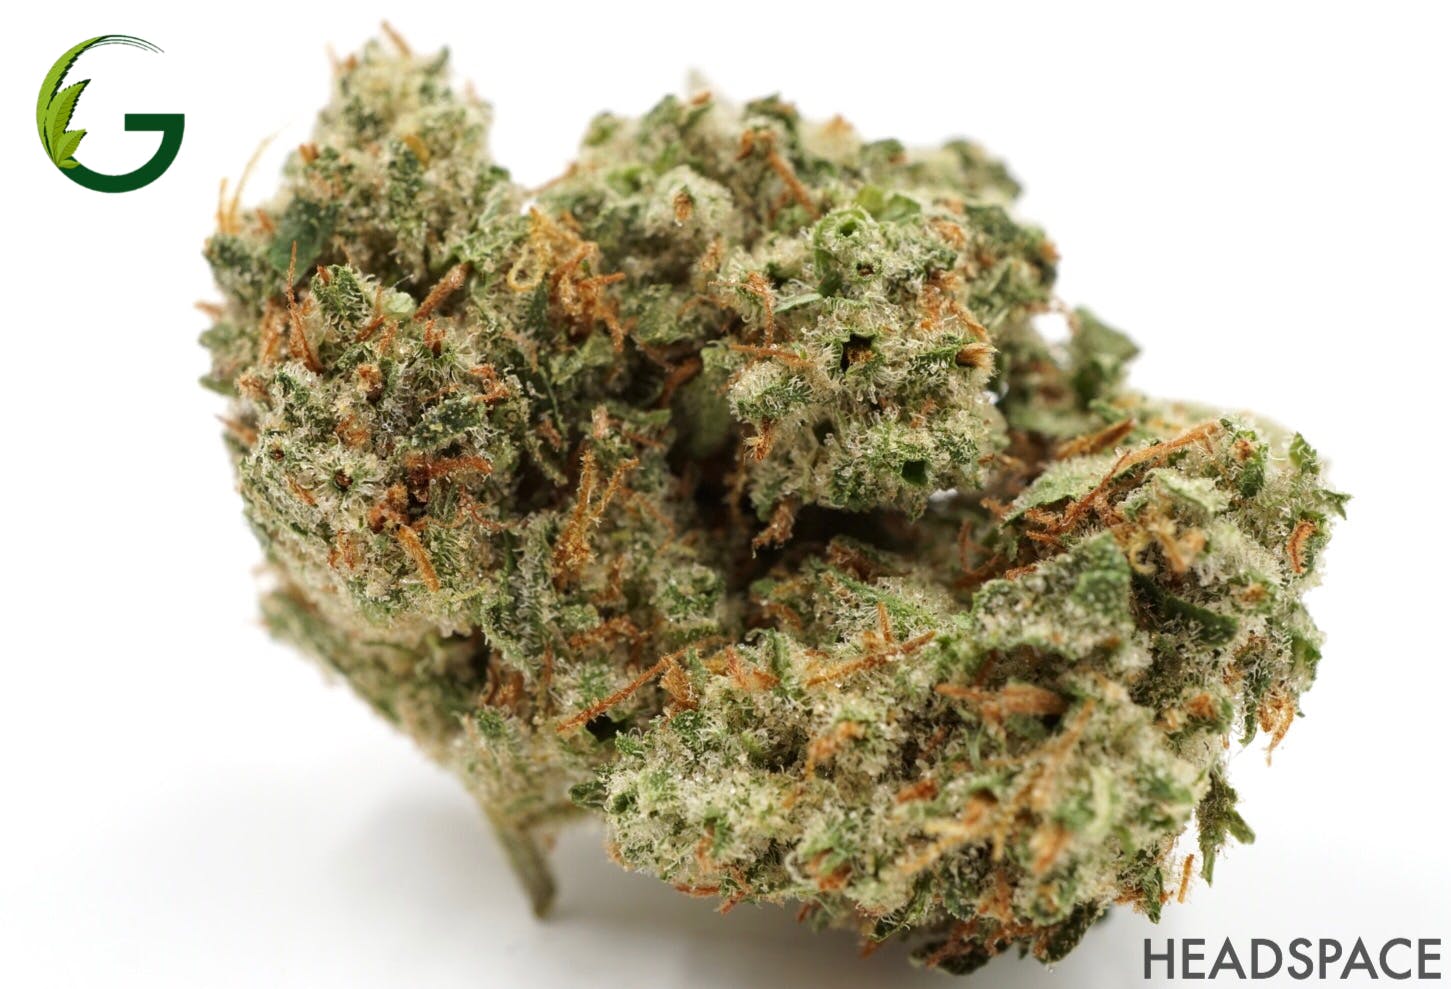 marijuana-dispensaries-the-good-dispensary-in-mesa-headspace